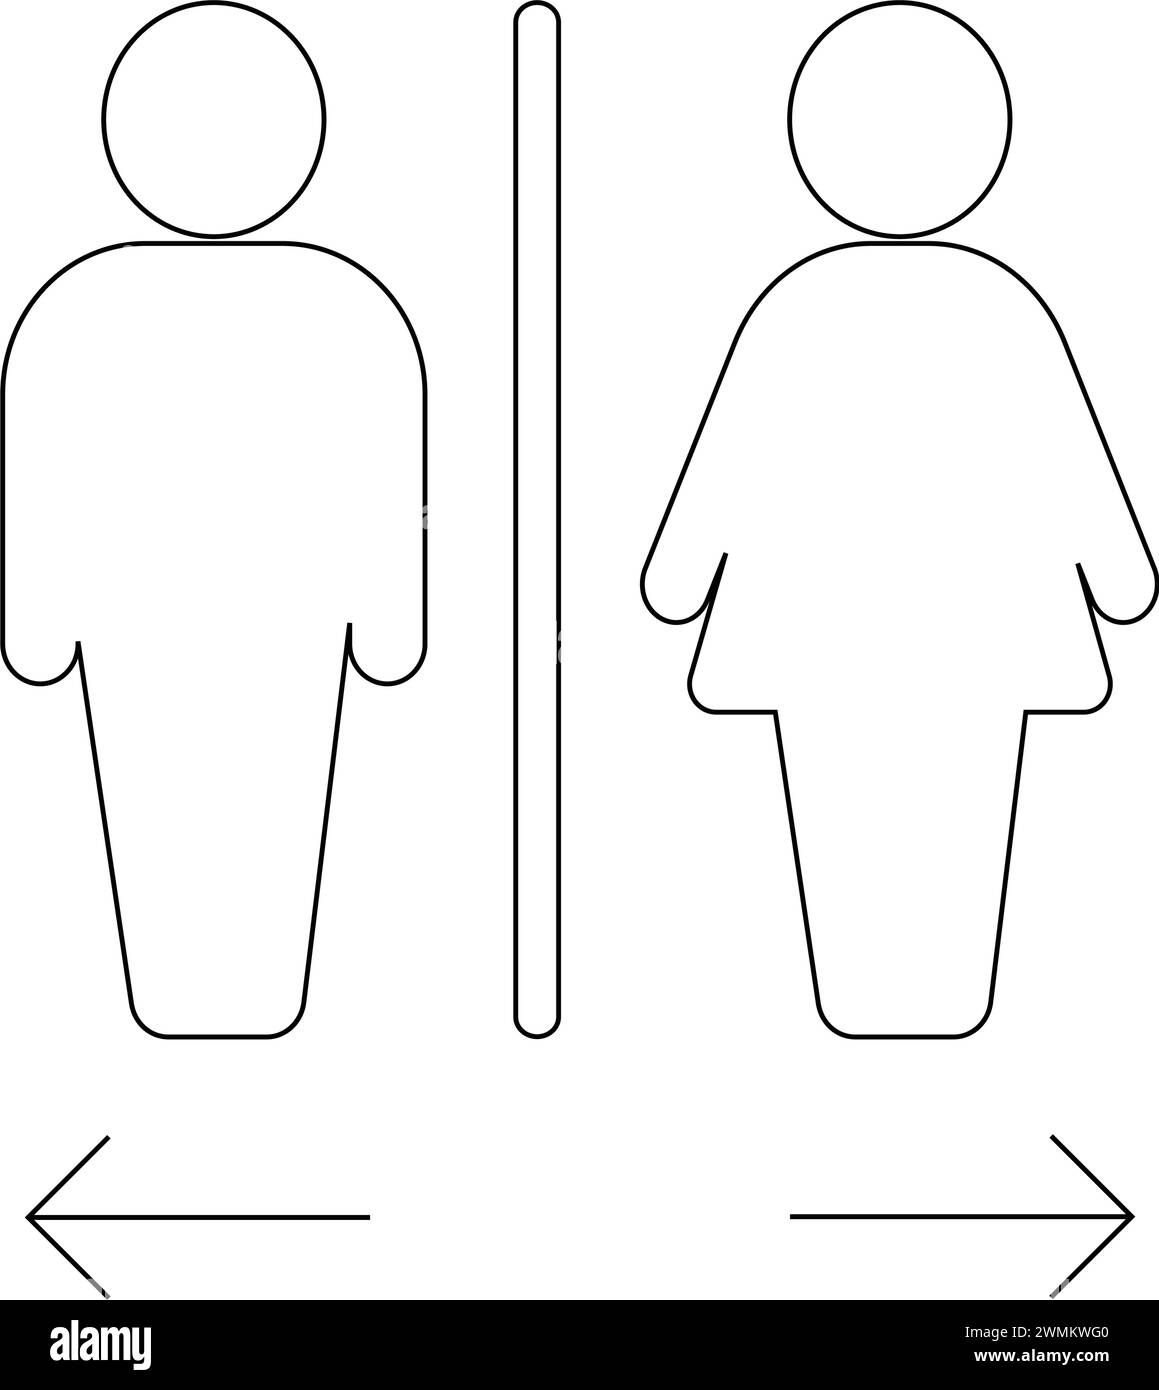 Vektor-Illustration für Herren und Frauen im Toilettendesign Stock Vektor